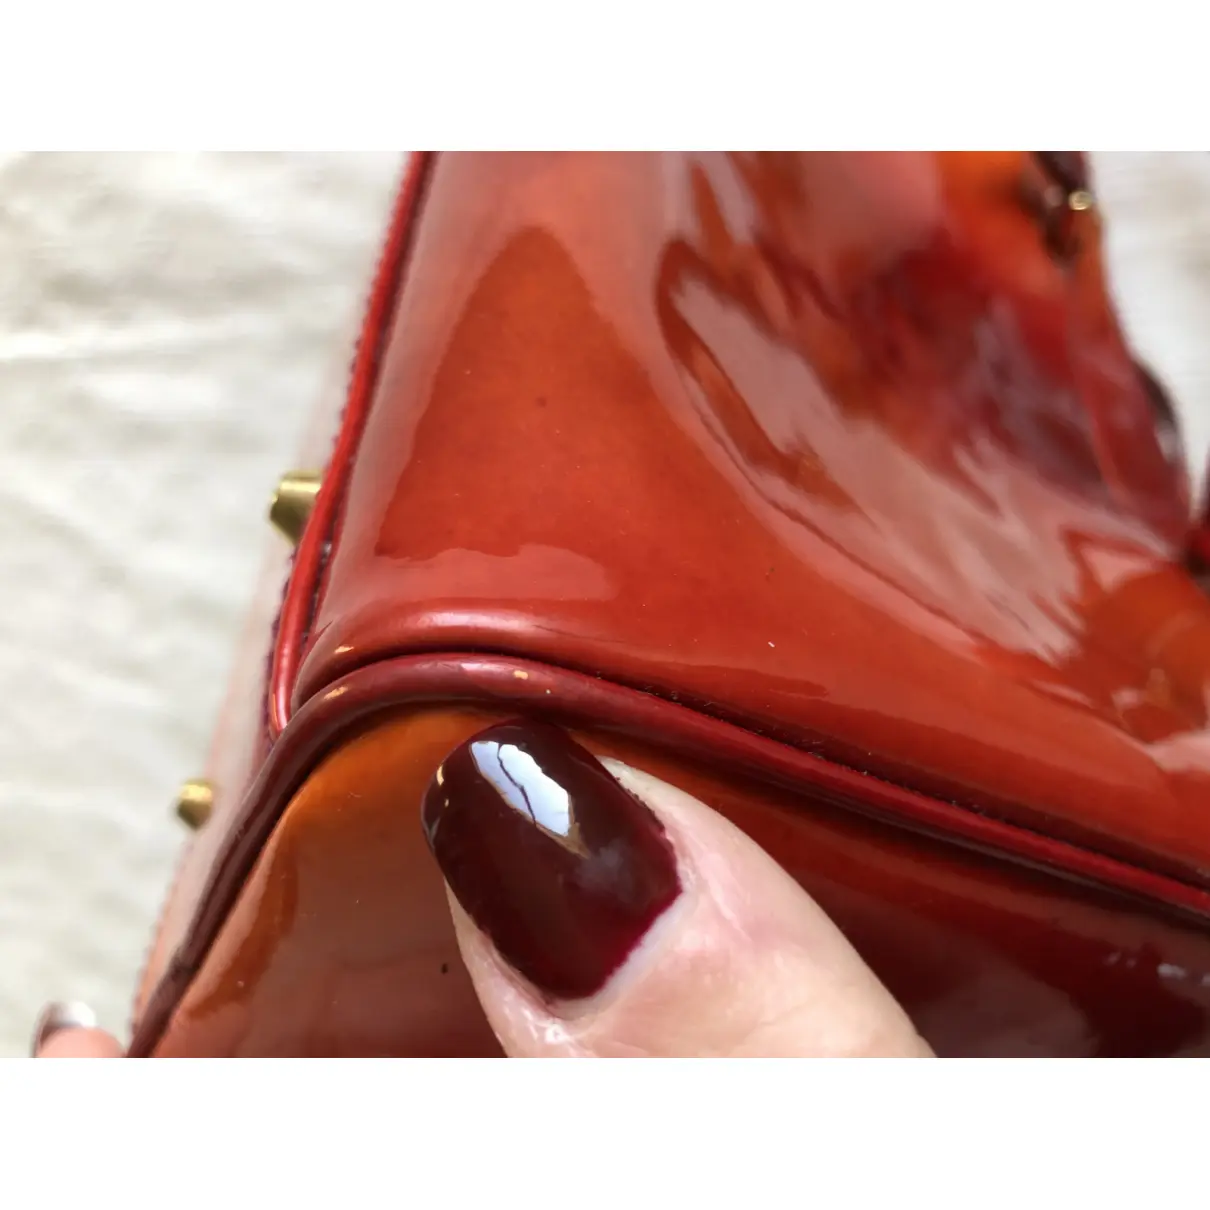 Patent leather handbag Christian Dior - Vintage